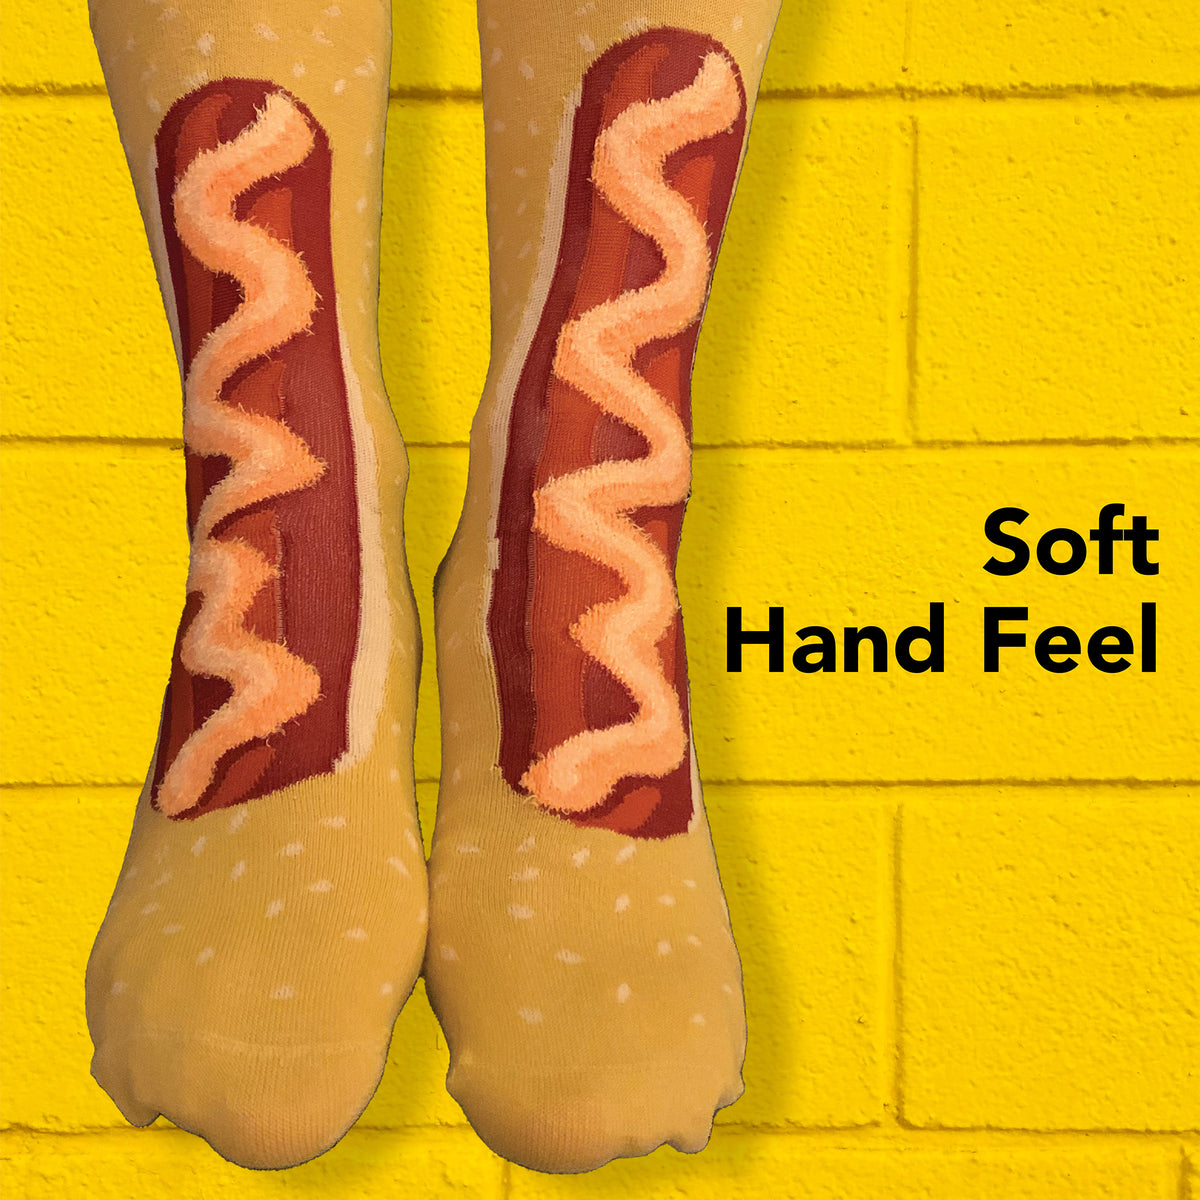 Soxbox Hotdog Novelty Socks 2 Pack